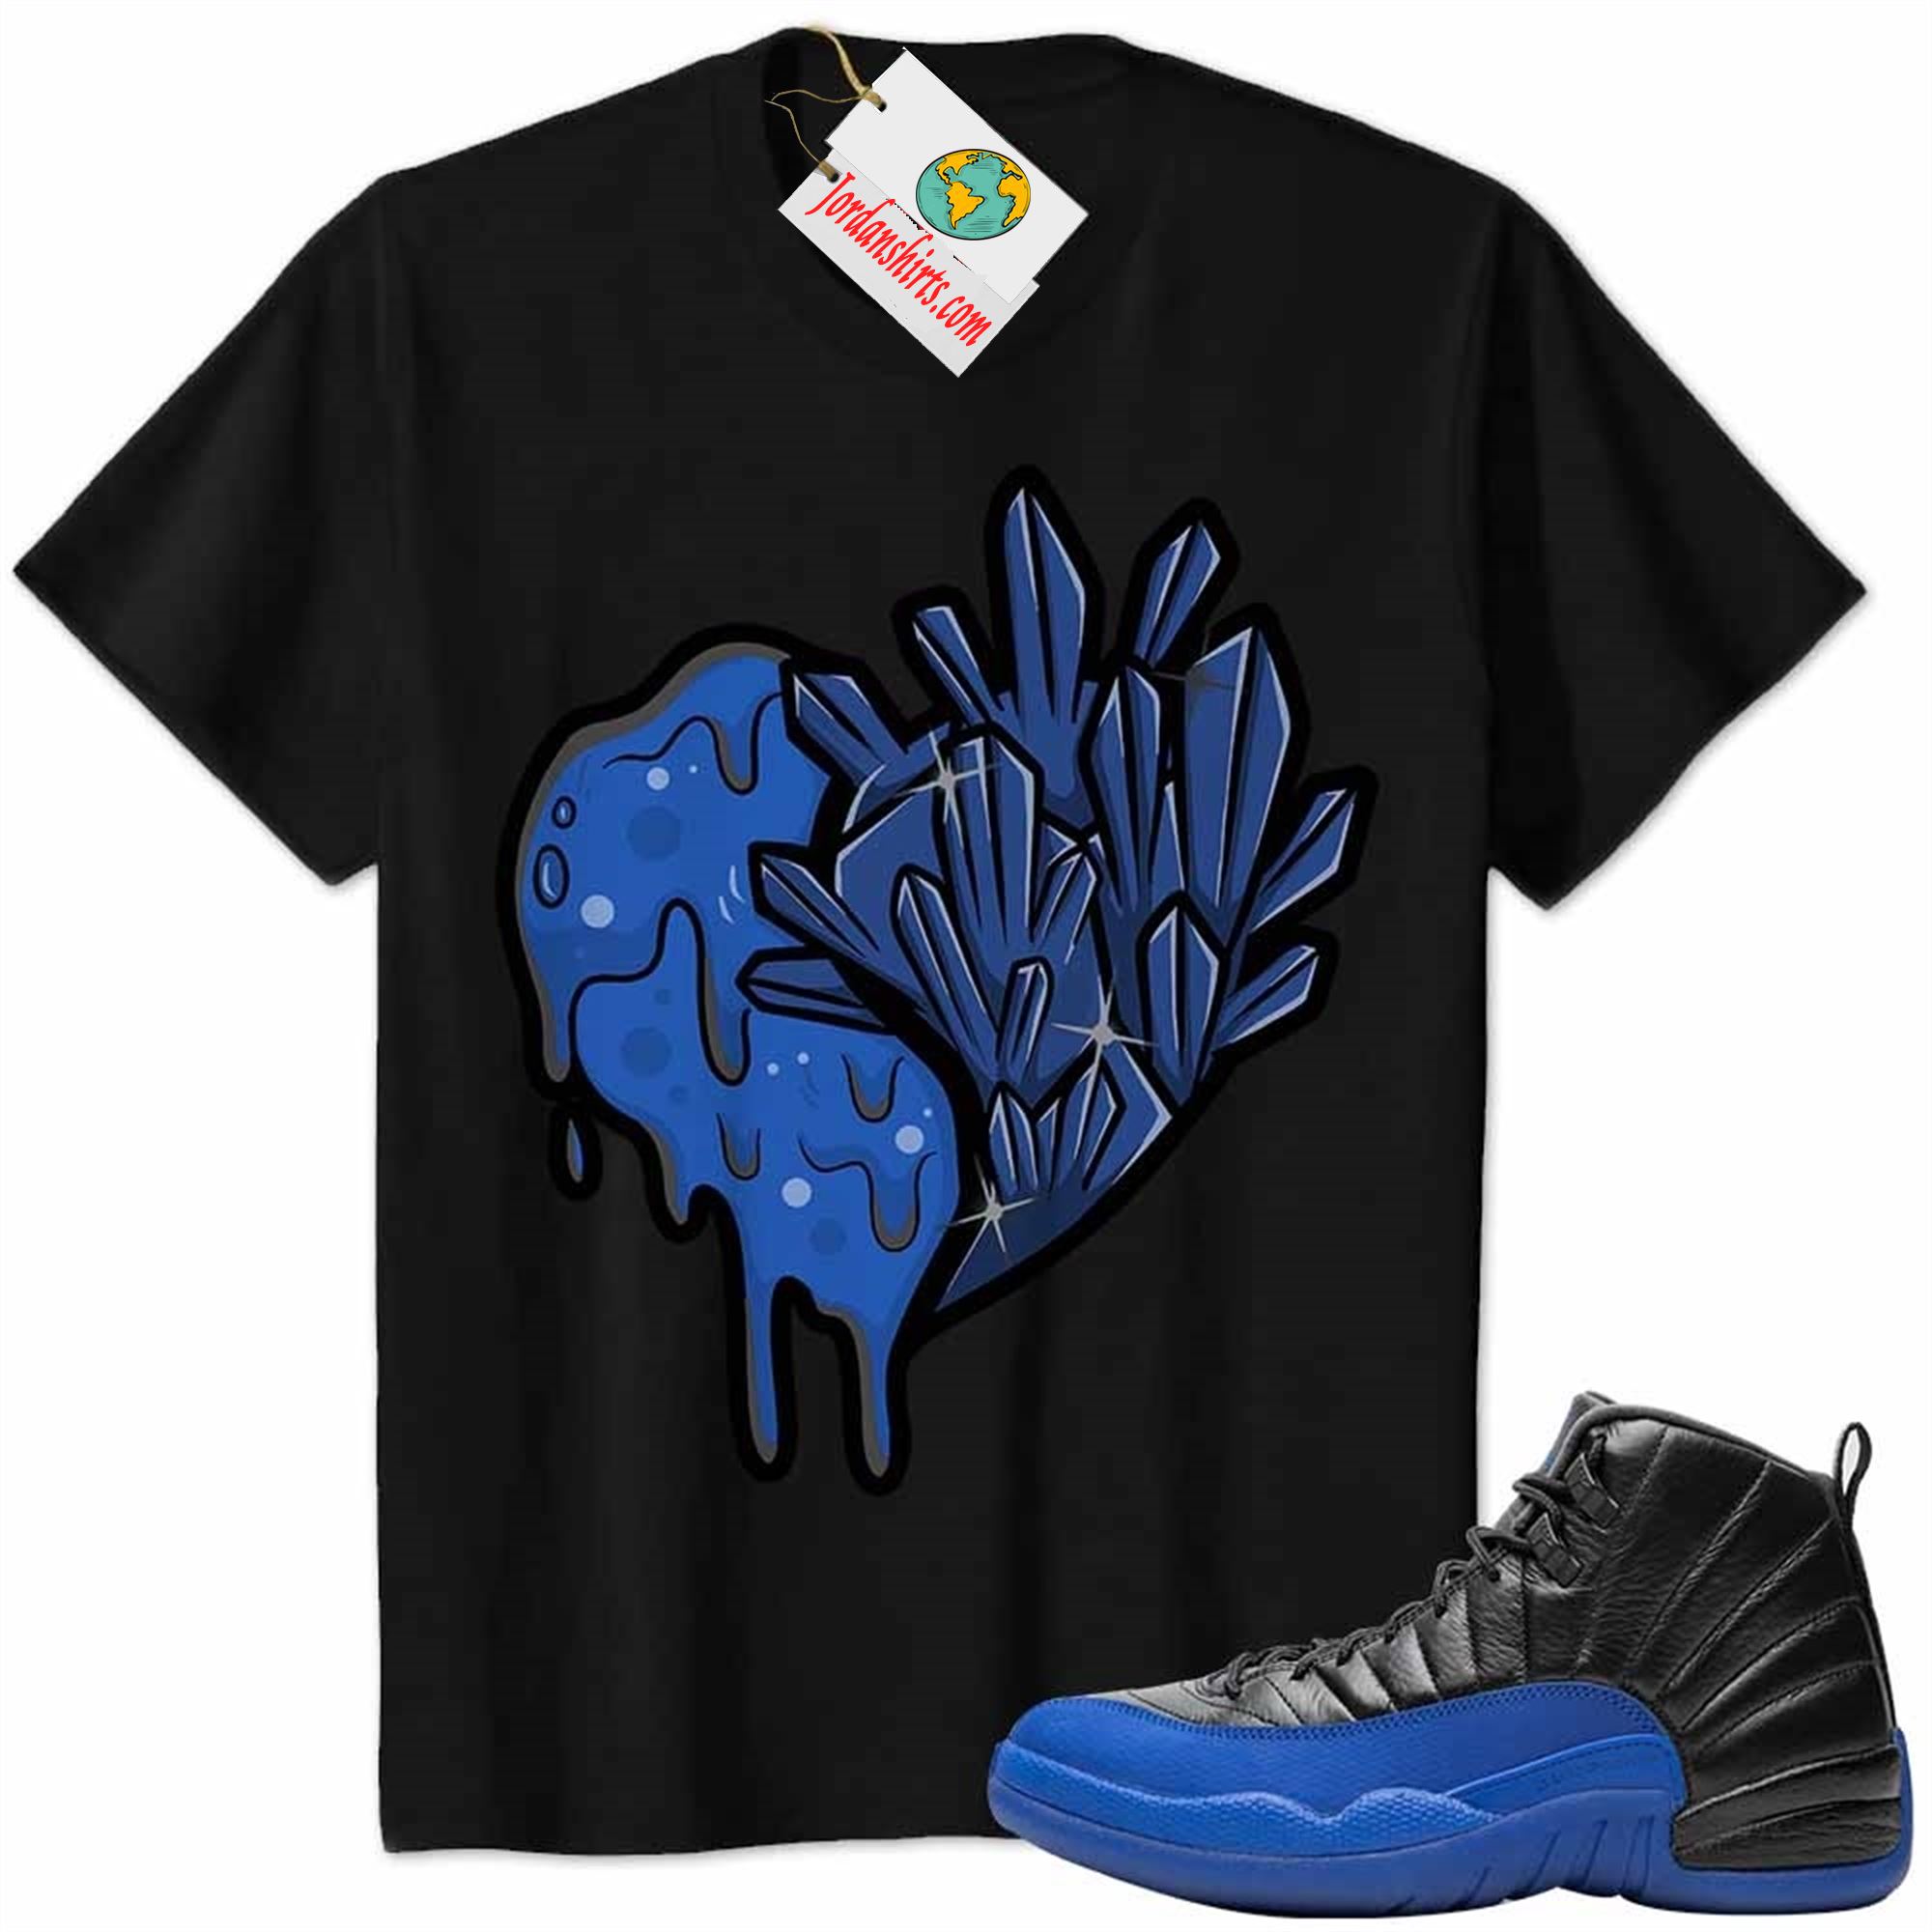 Jordan 12 Shirt, Crystal And Melt Heart Black Air Jordan 12 Game Royal 12s Plus Size Up To 5xl